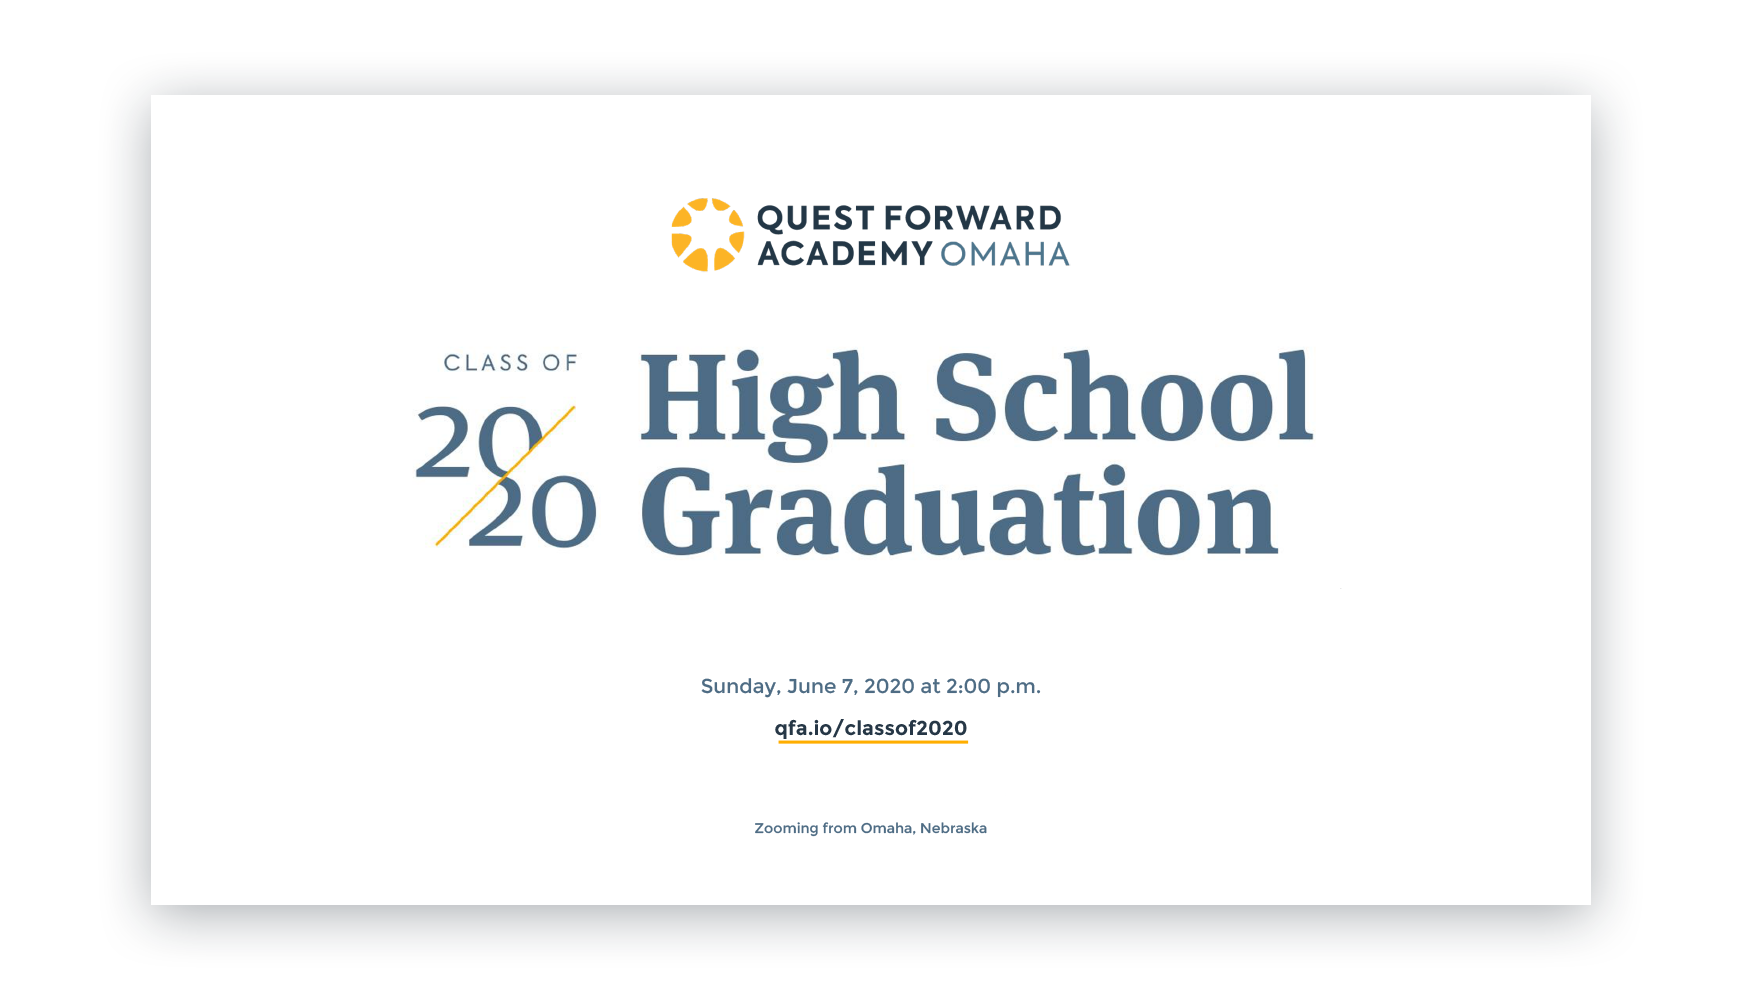 2020 Graduation Event Program for Quest Forward Academy Omaha